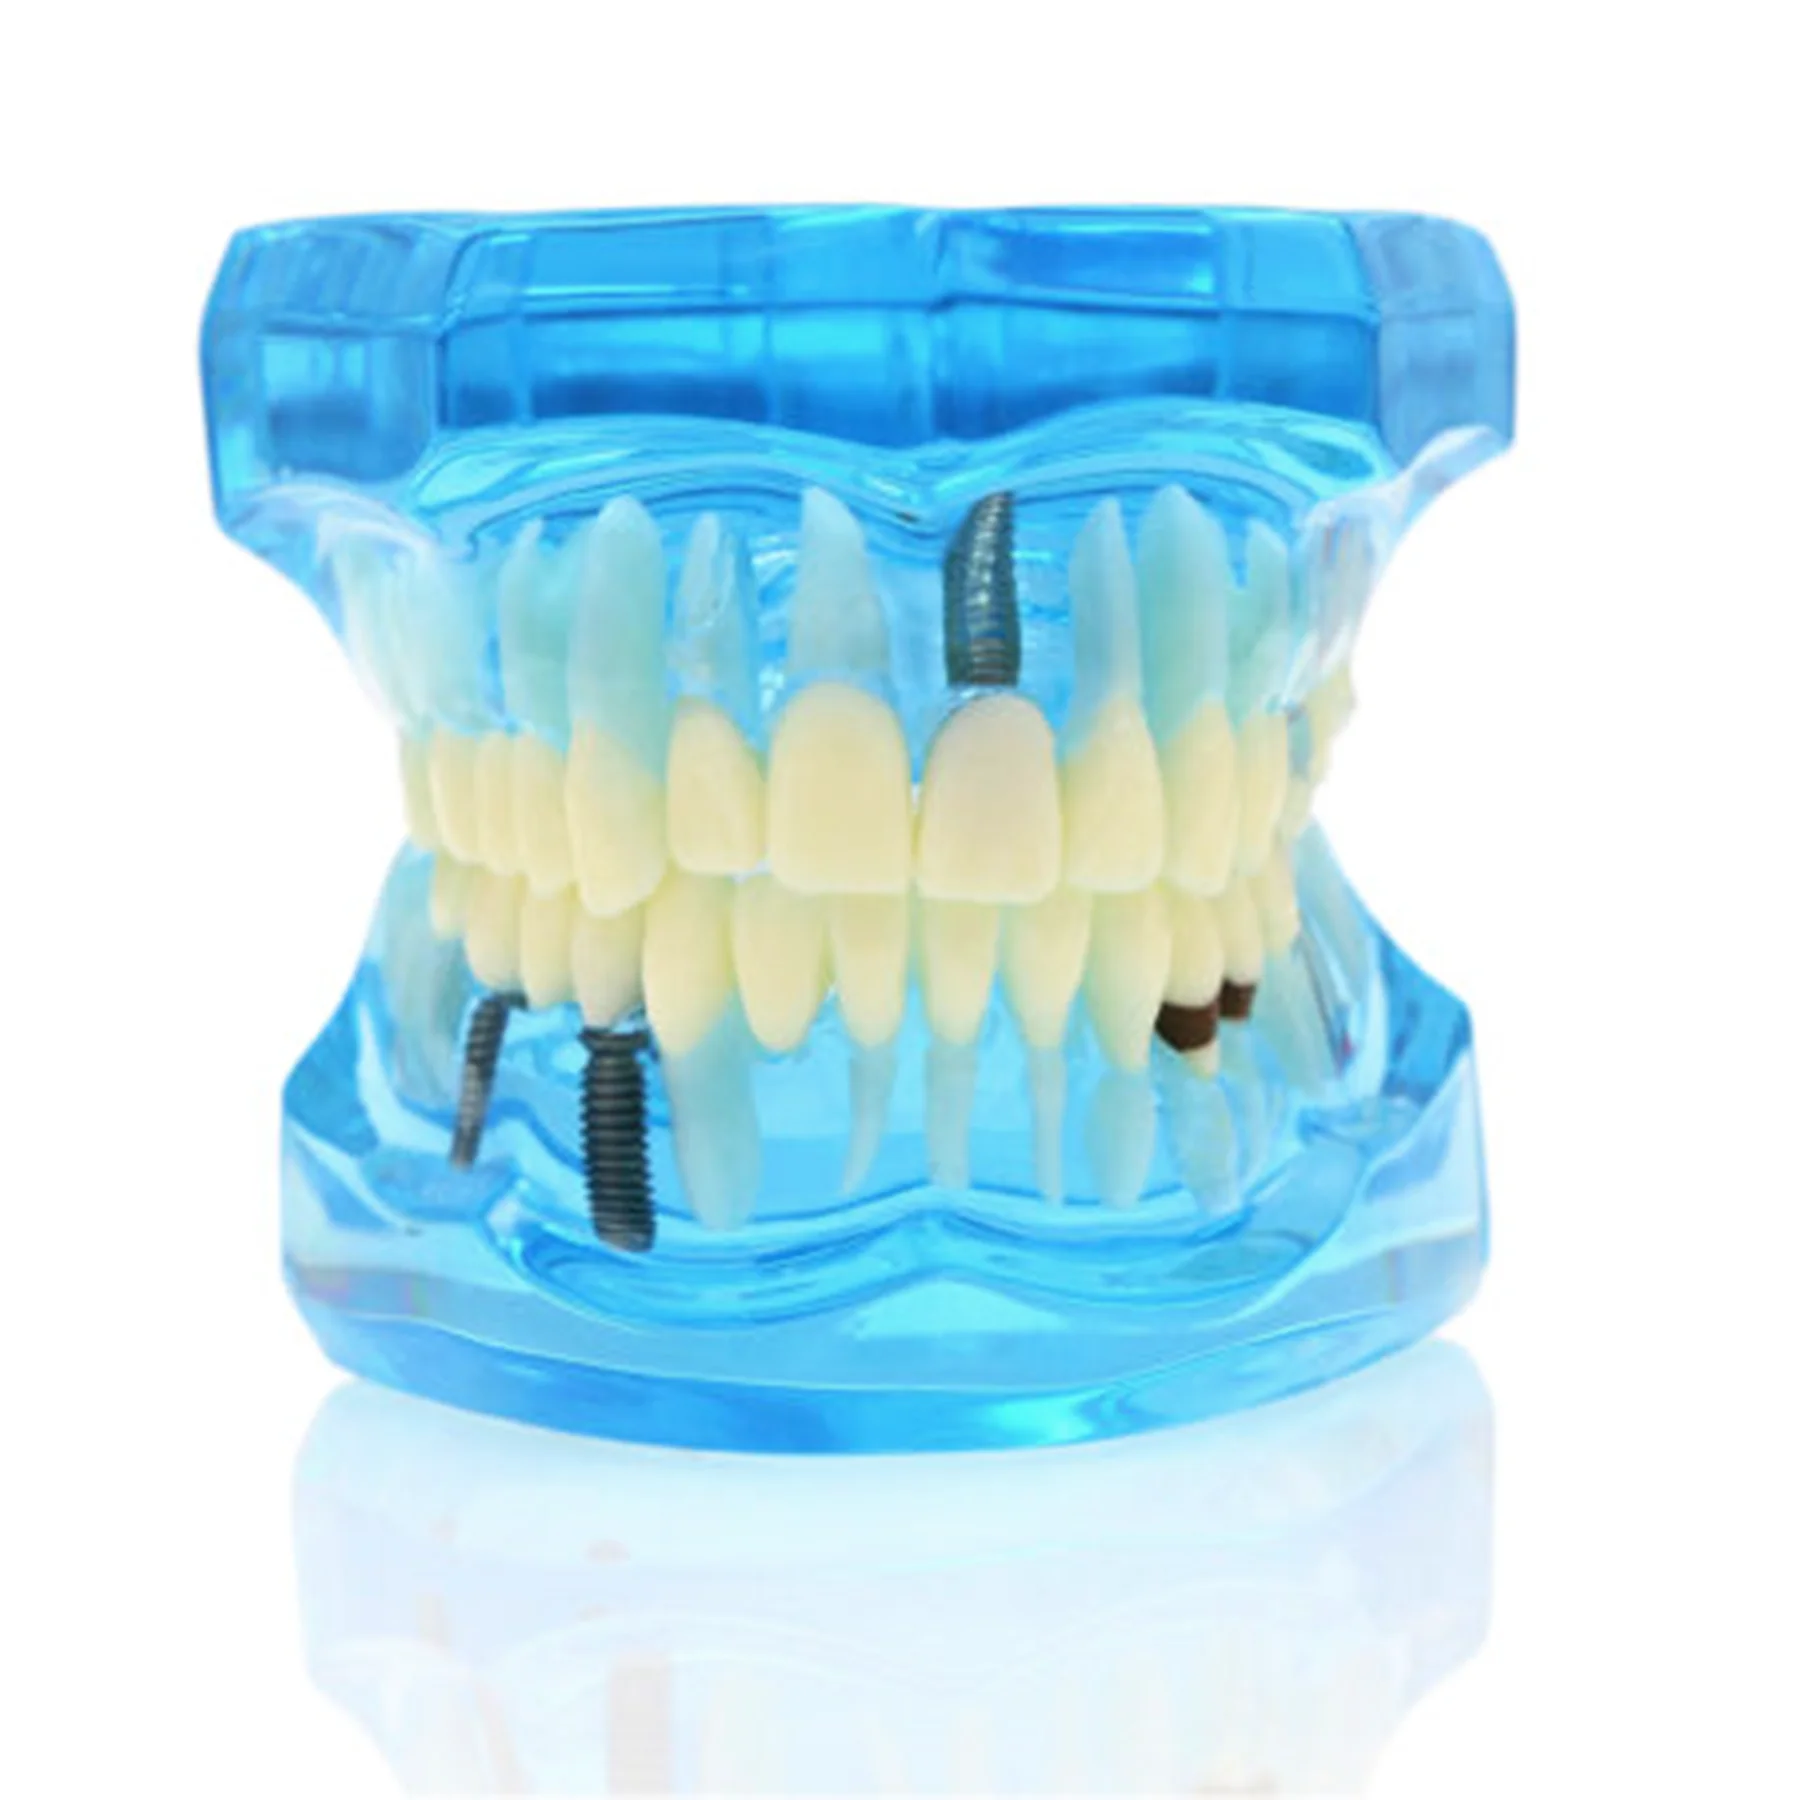 

Dental Teeth Tooth Model Implant Restoration Typodont Demo Oral Pathology Bridge Teach Study M2001 Blue Color